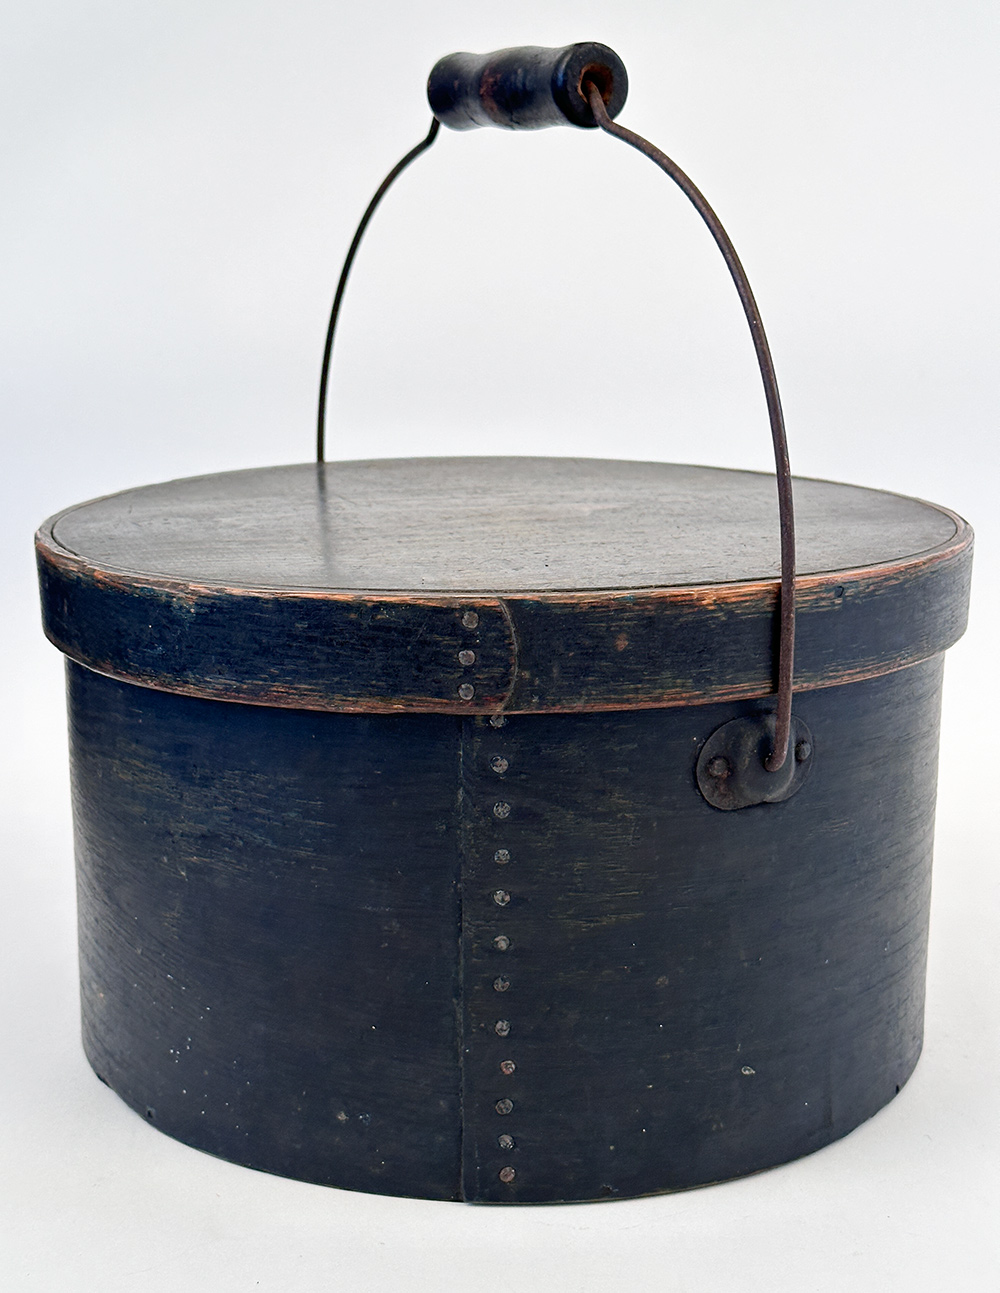 19th century bail handled pantry box in original blue paint